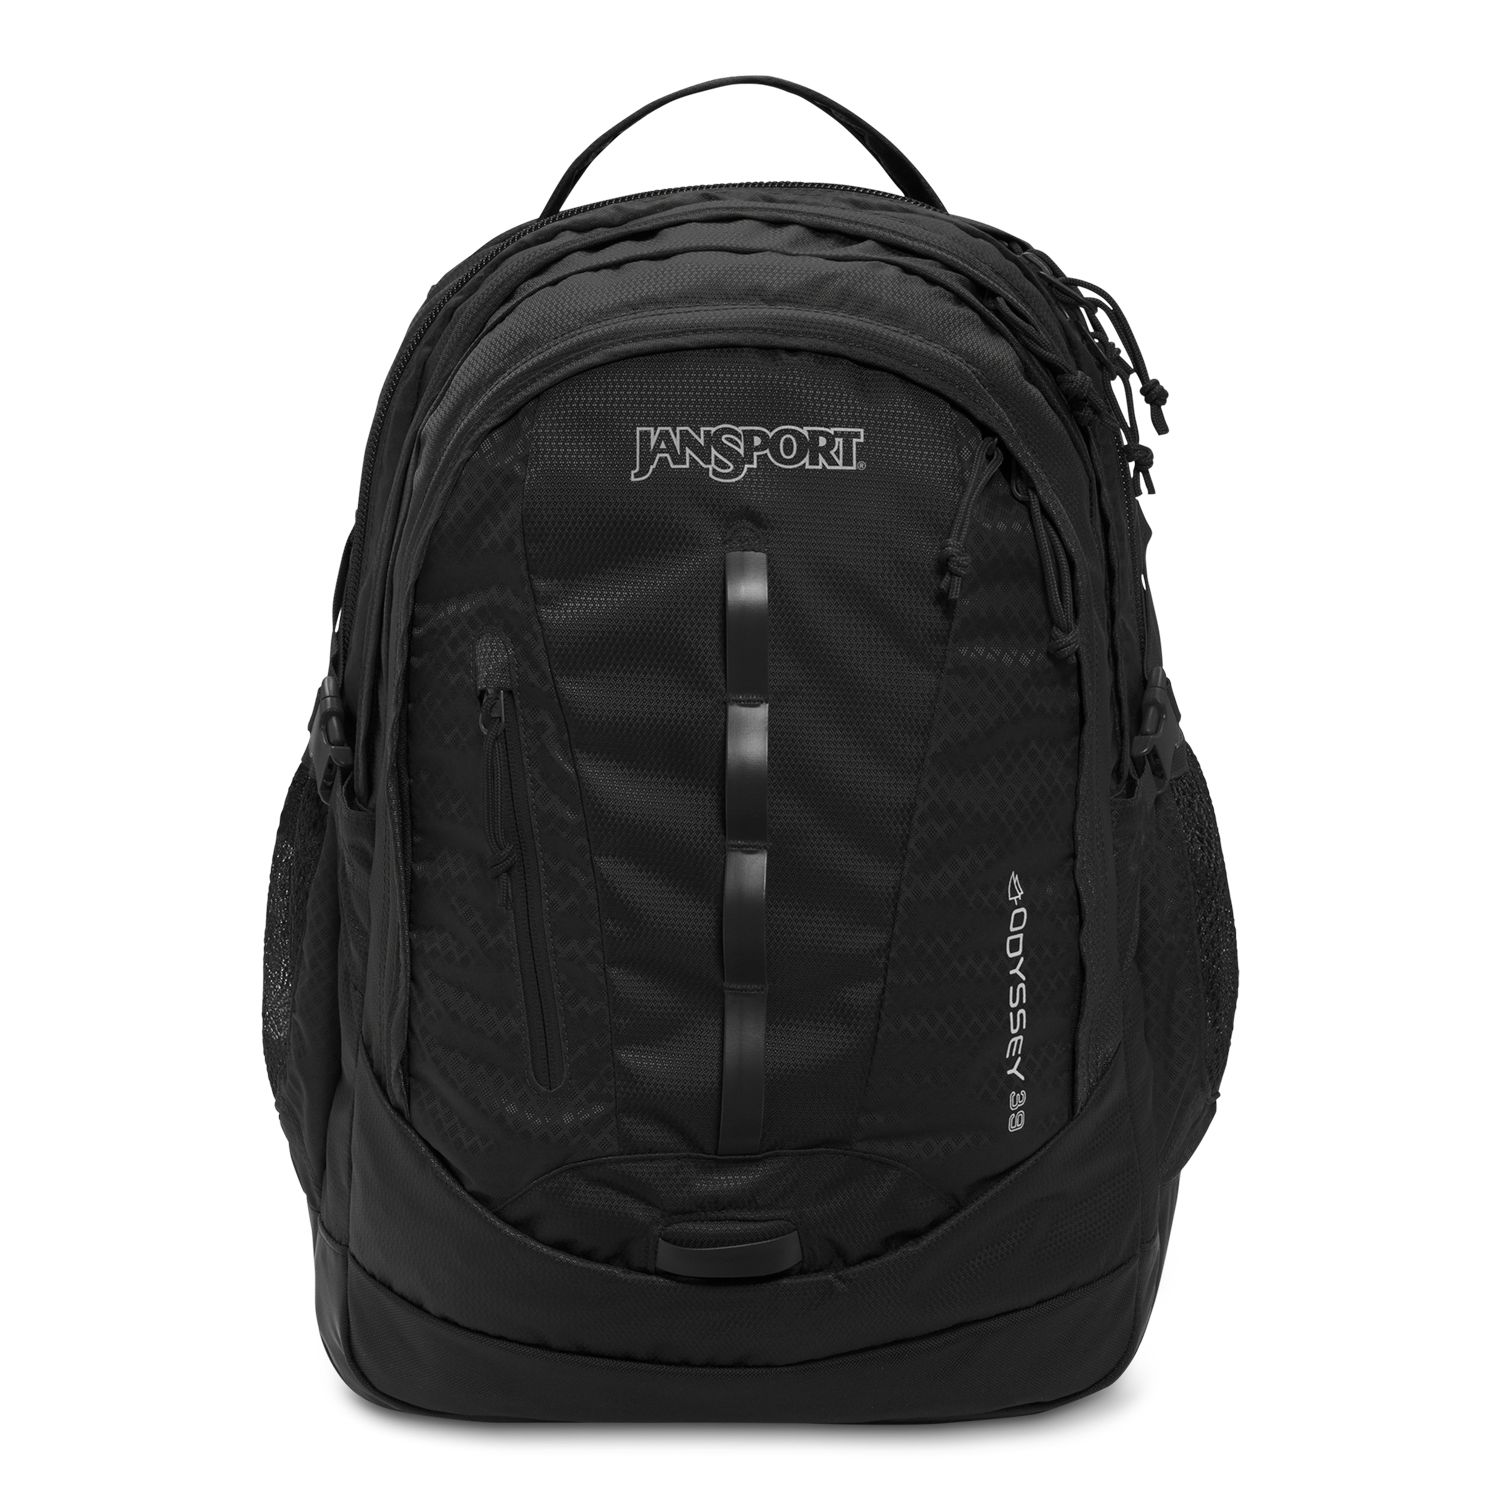 backpacks similar to jansport